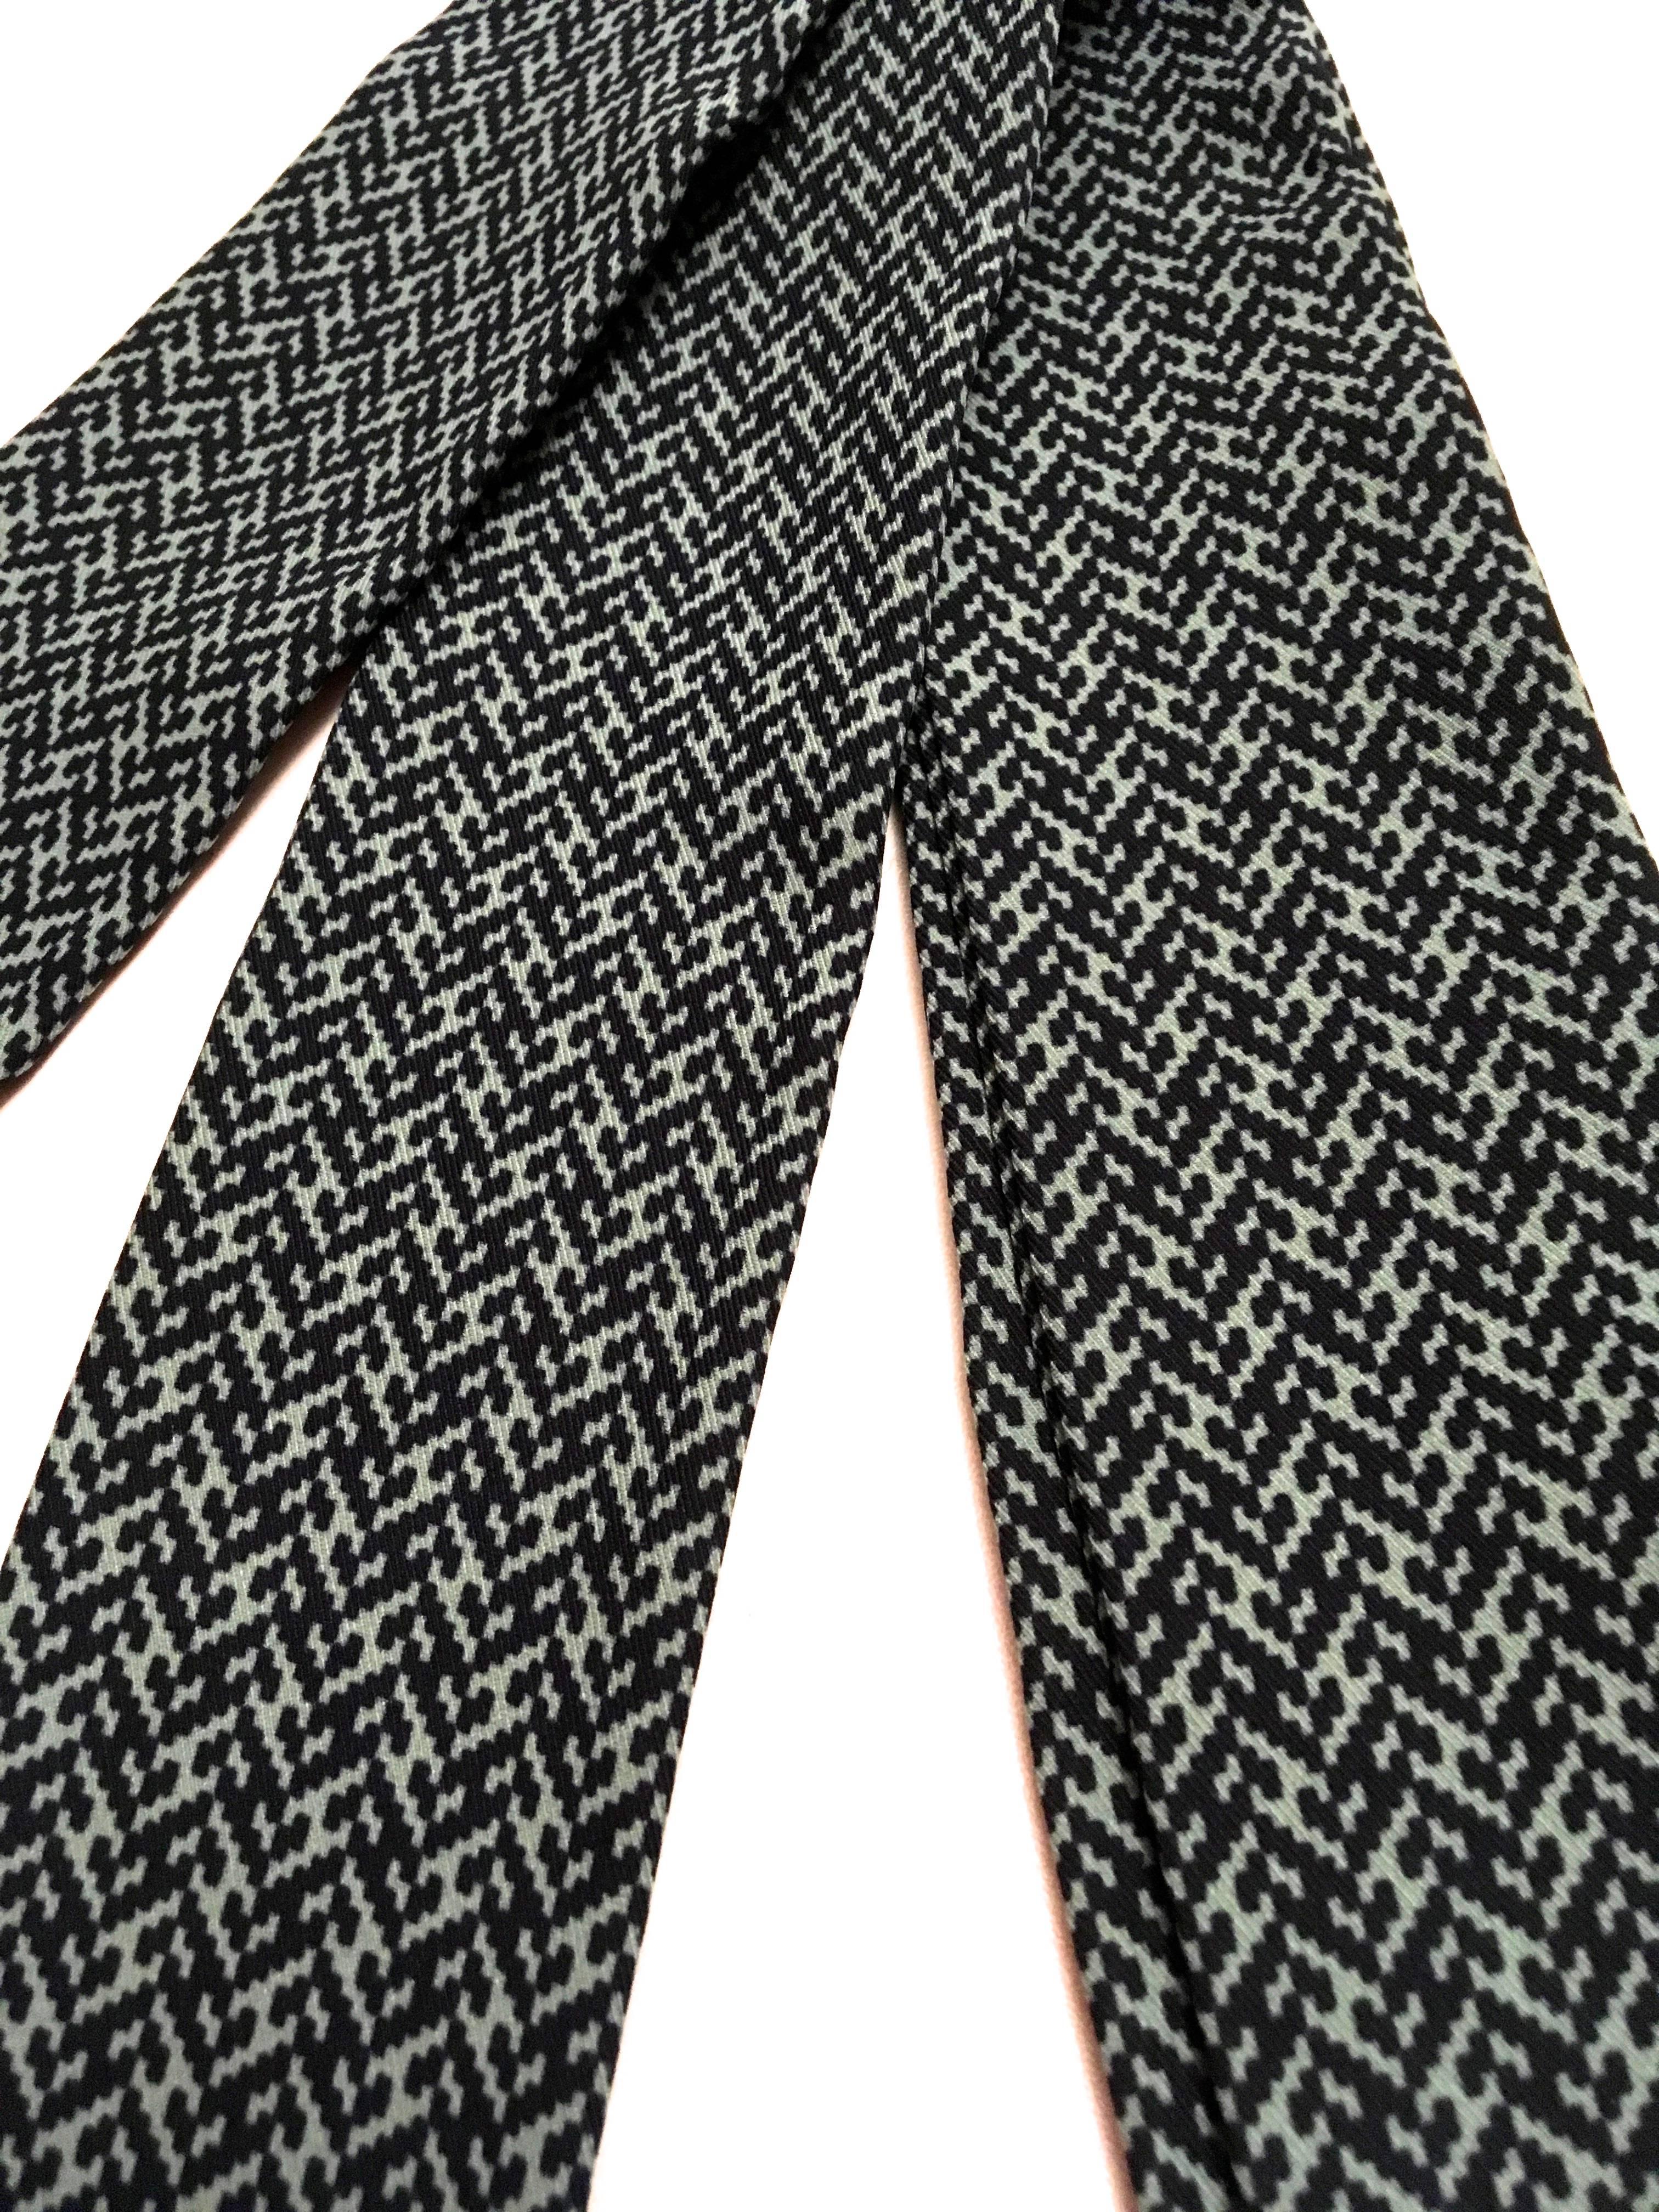 Rare Hermes Scarf / Tie / Belt - 100% Silk - New  For Sale 2